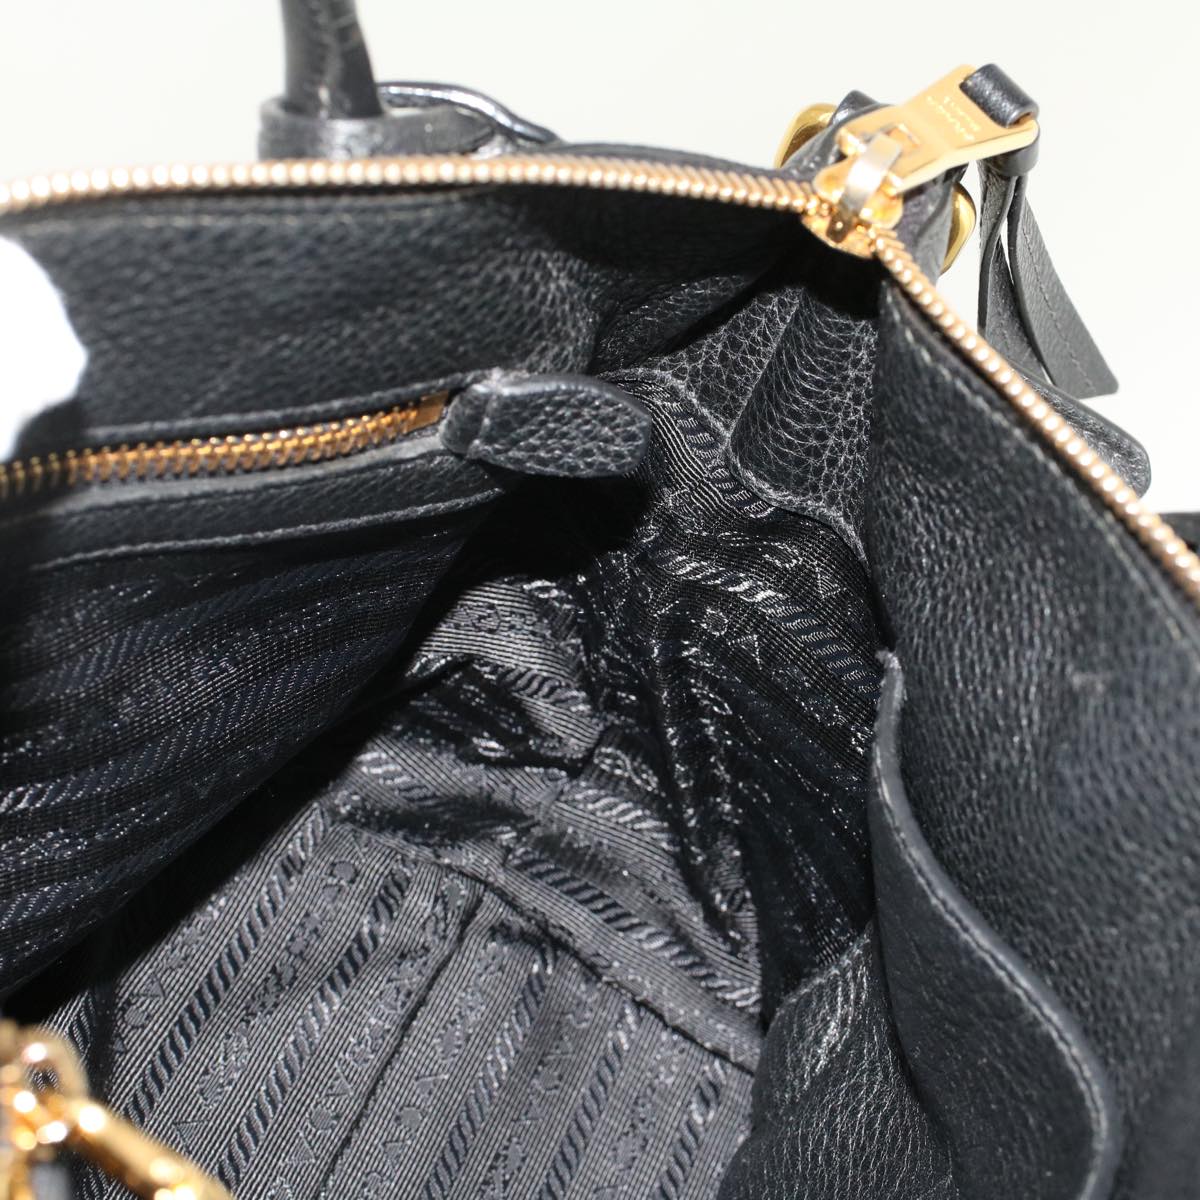 PRADA Hand Bag Leather Black Auth am4677